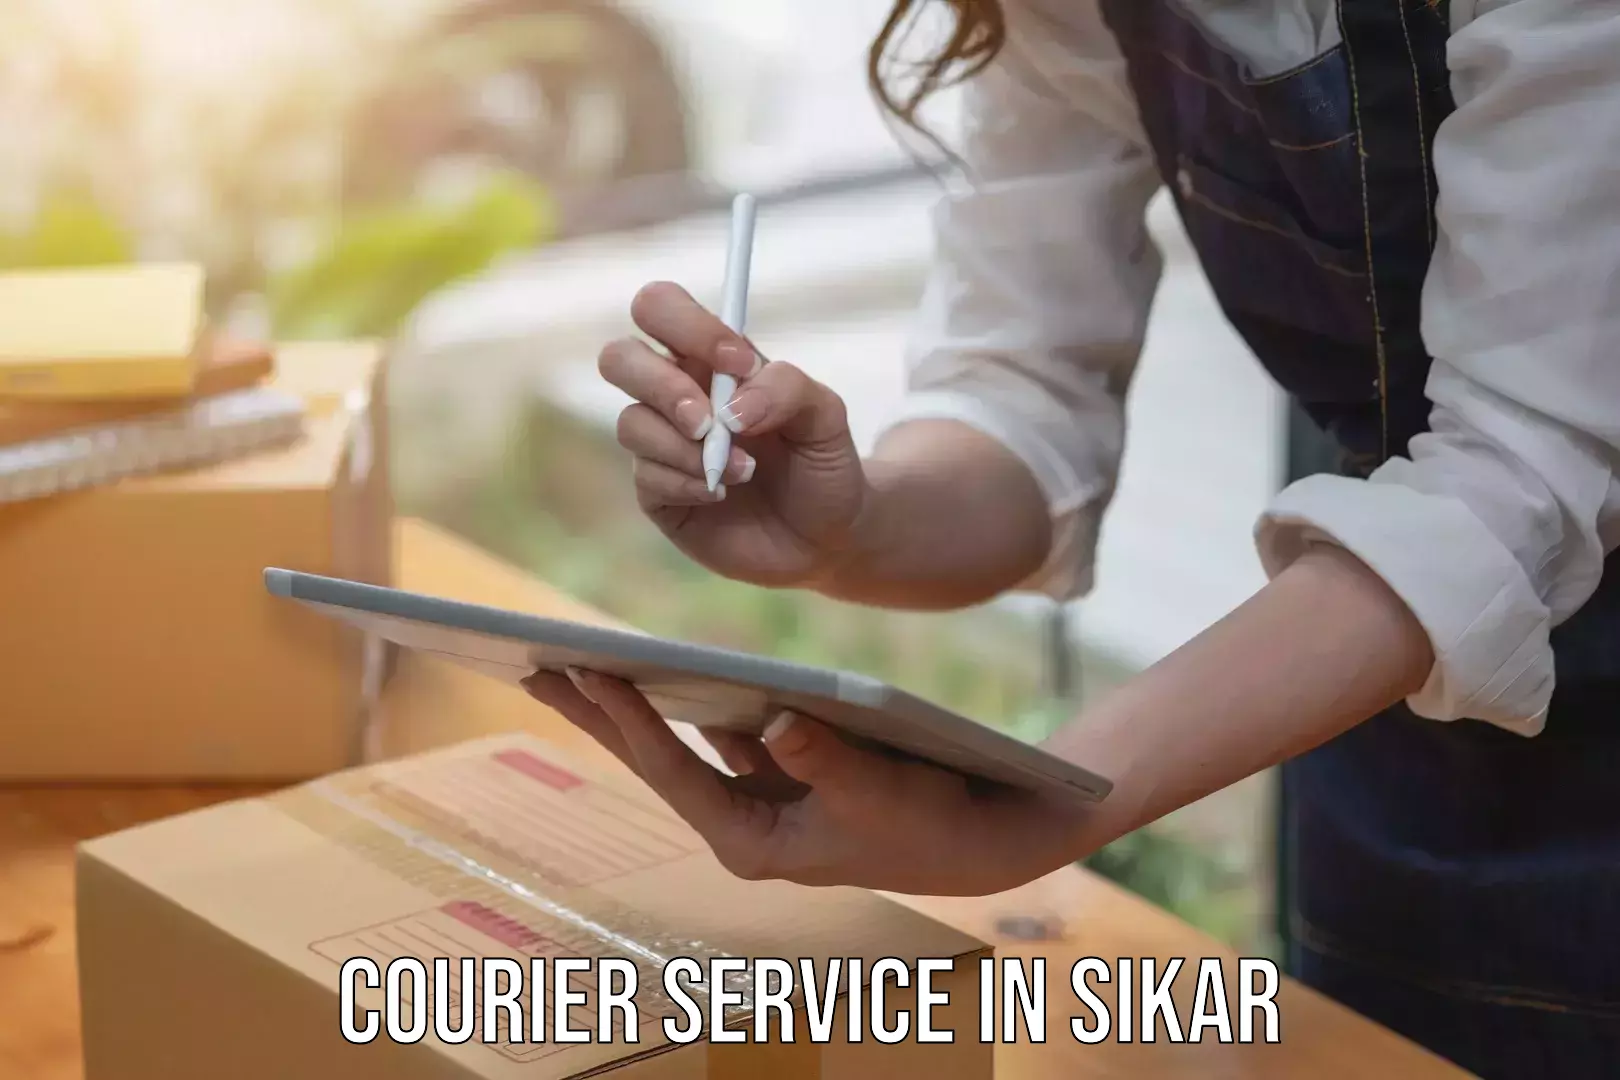 Express logistics service in Sikar